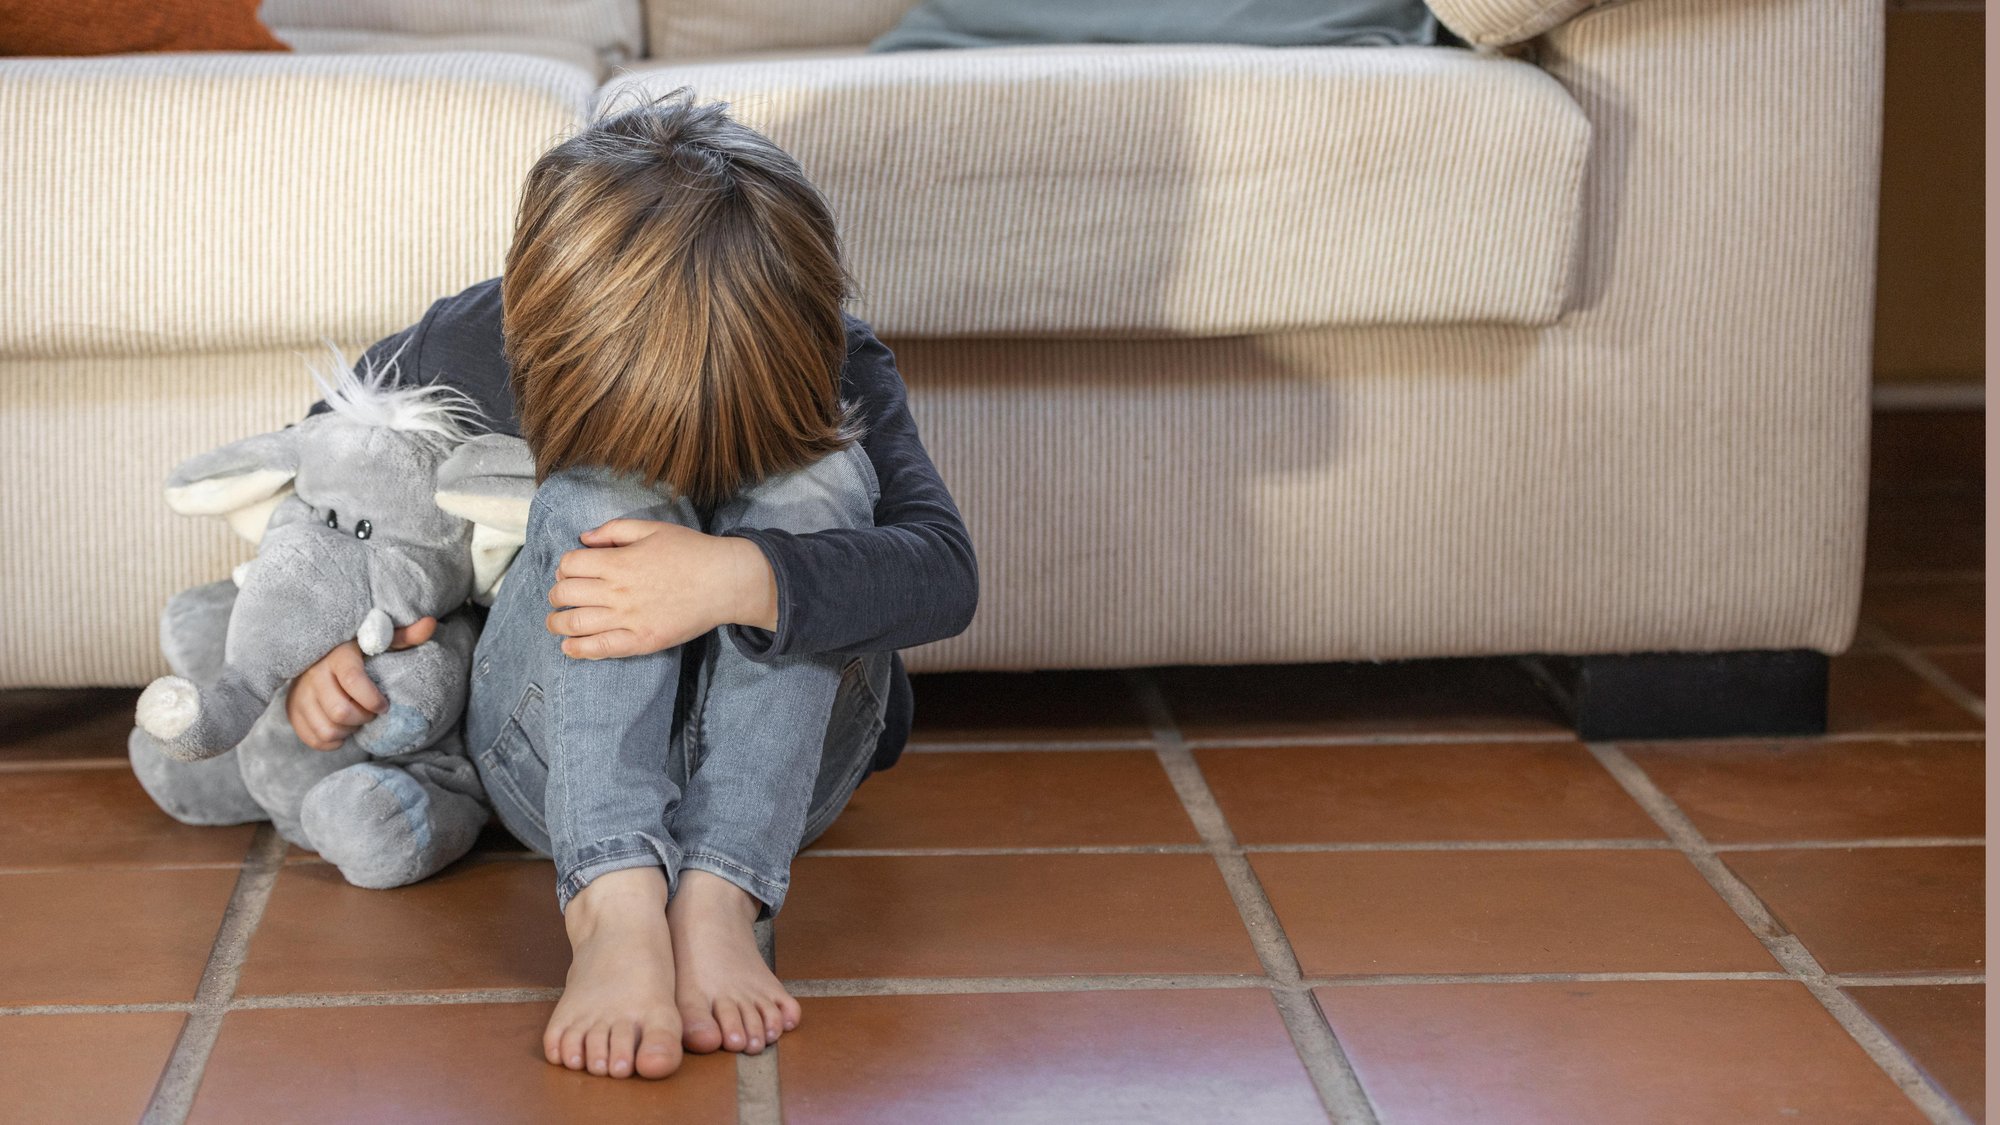 abuso infantil-qué es el abuso infantil - cómo prevenir el abuso infantil (1)